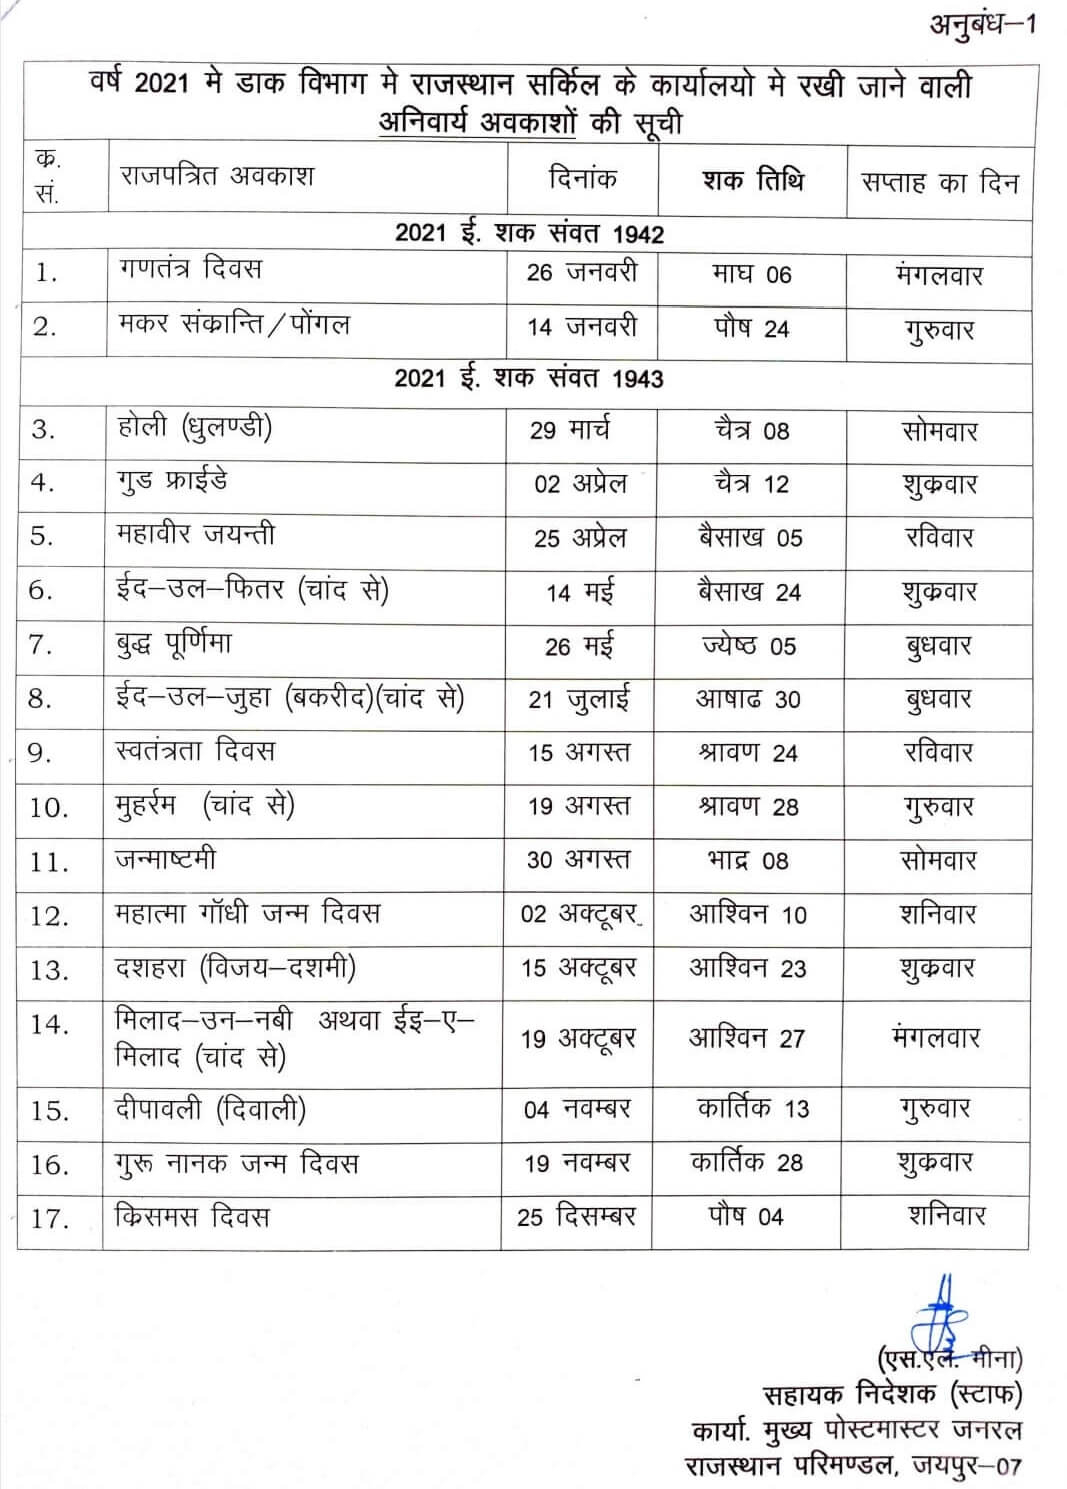 Rajasthan Postal Circle Holiday List 2021 Pdf Rajasthan